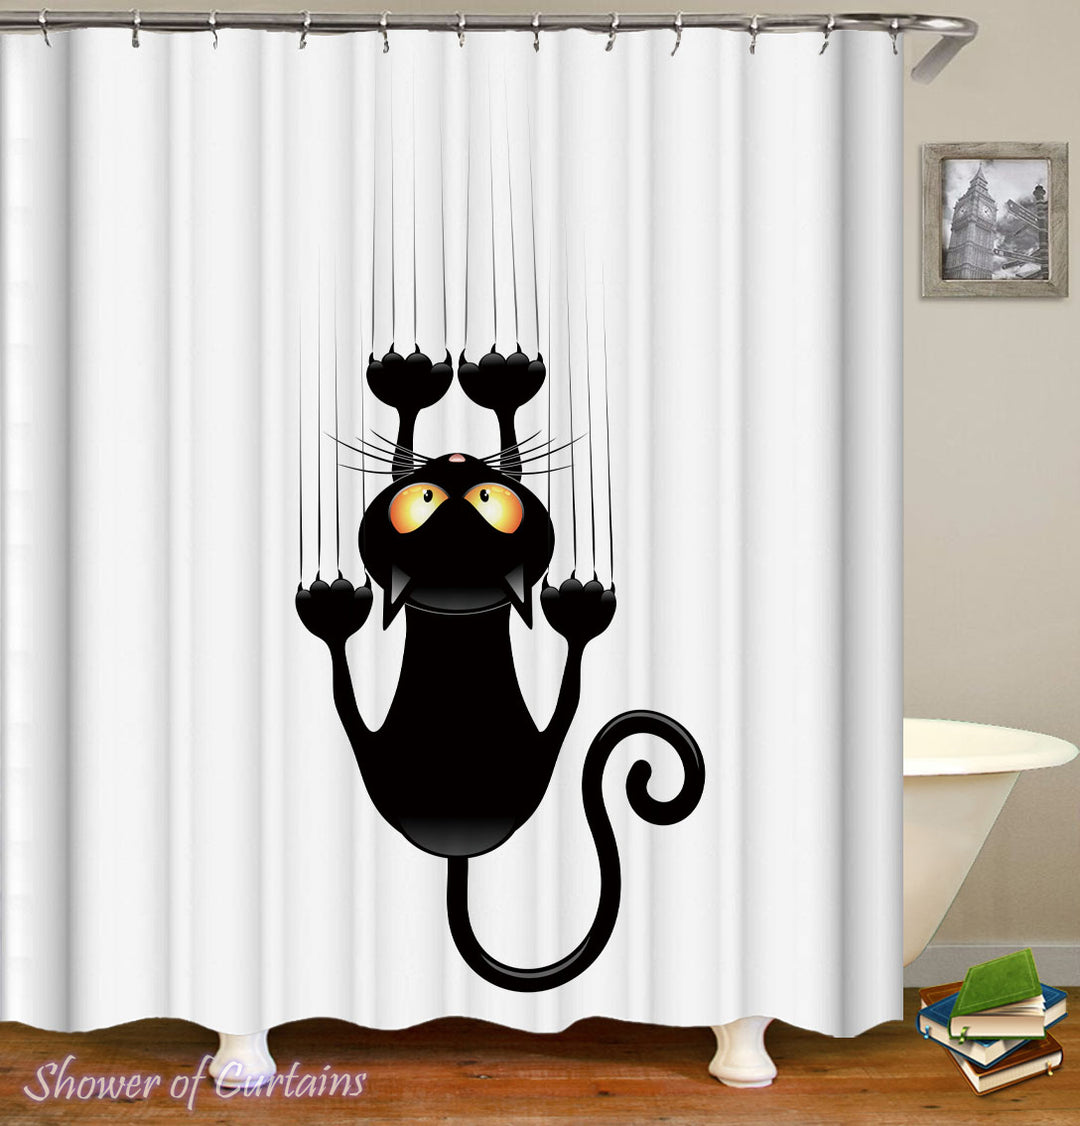 Shower Curtain of Slippery Cat